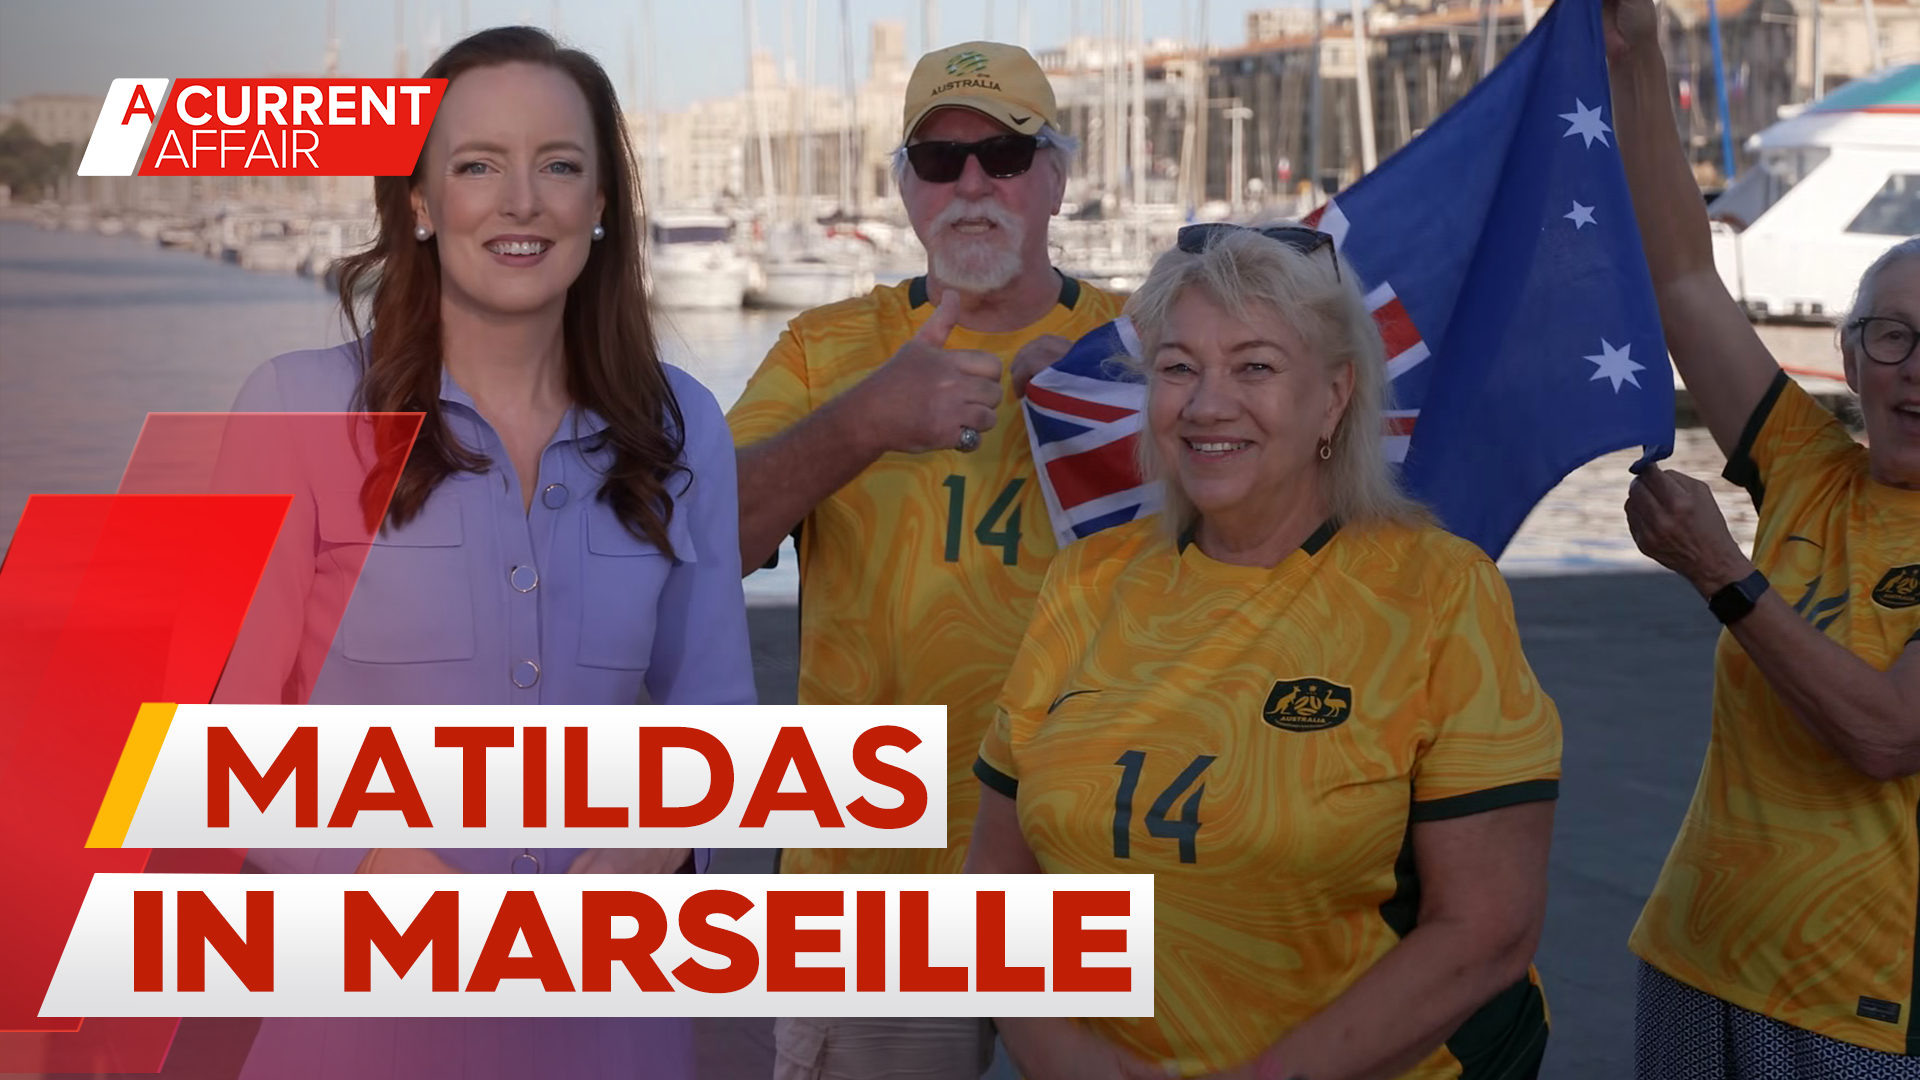 Matildas fans make noise in Marseille ahead of Paris 2024 debut